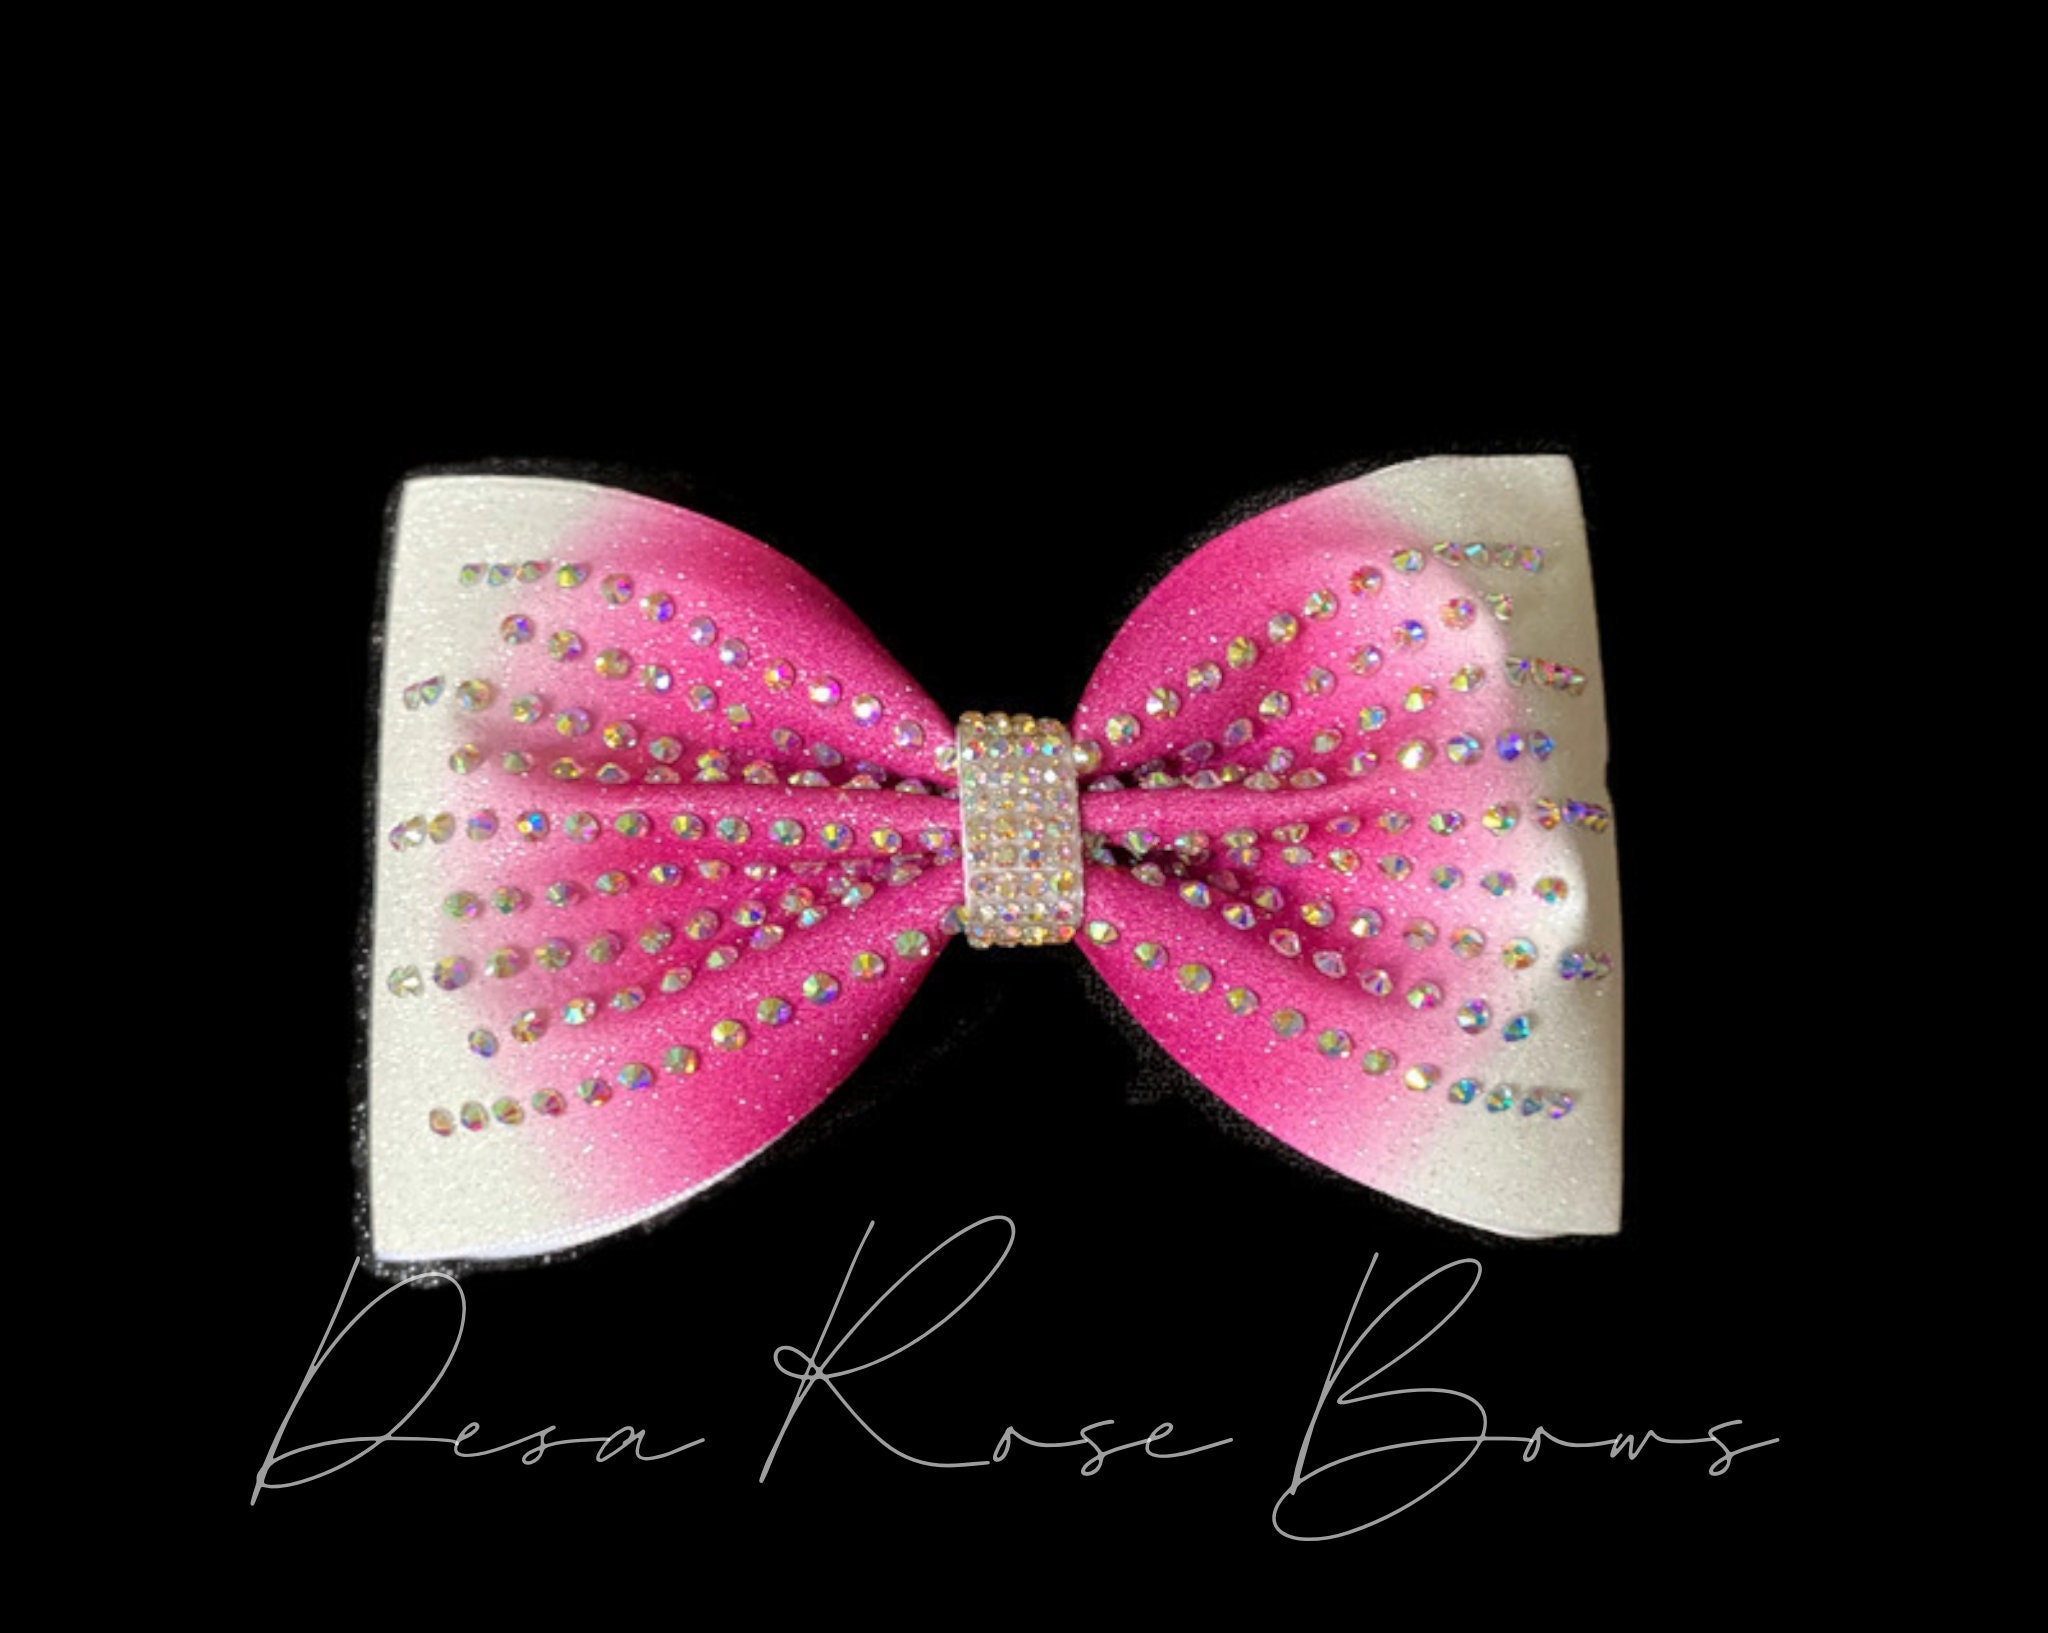 Hot PINK 4 tailless rhinestone Fabric Cheer Bow